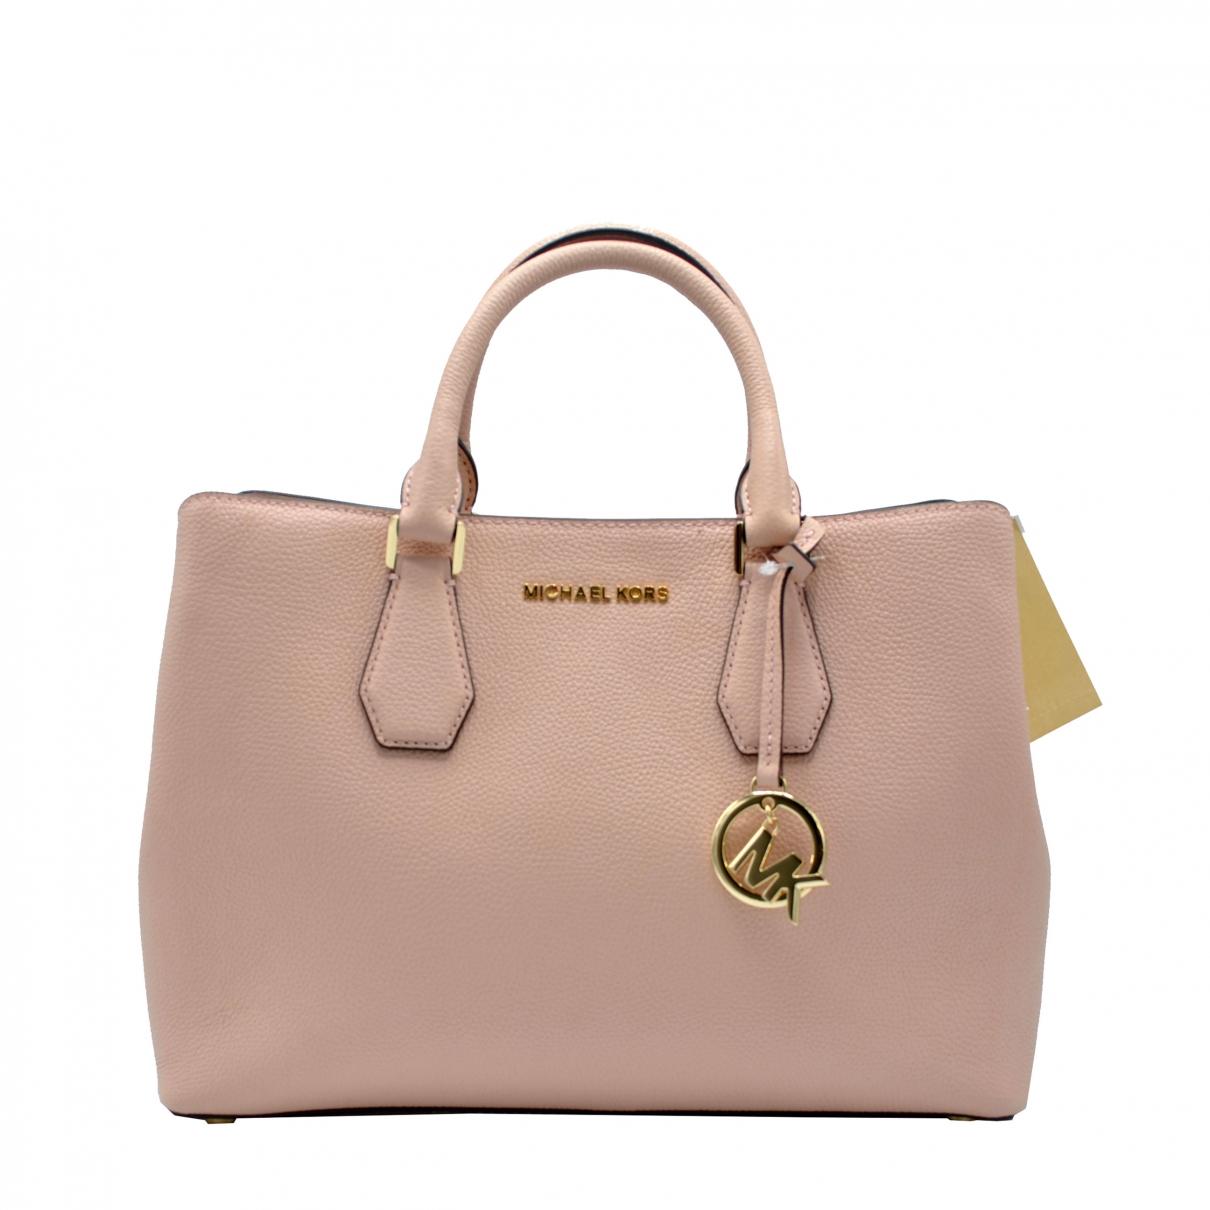 Michael Kors Pink Leather Handbag in Pink - Lyst